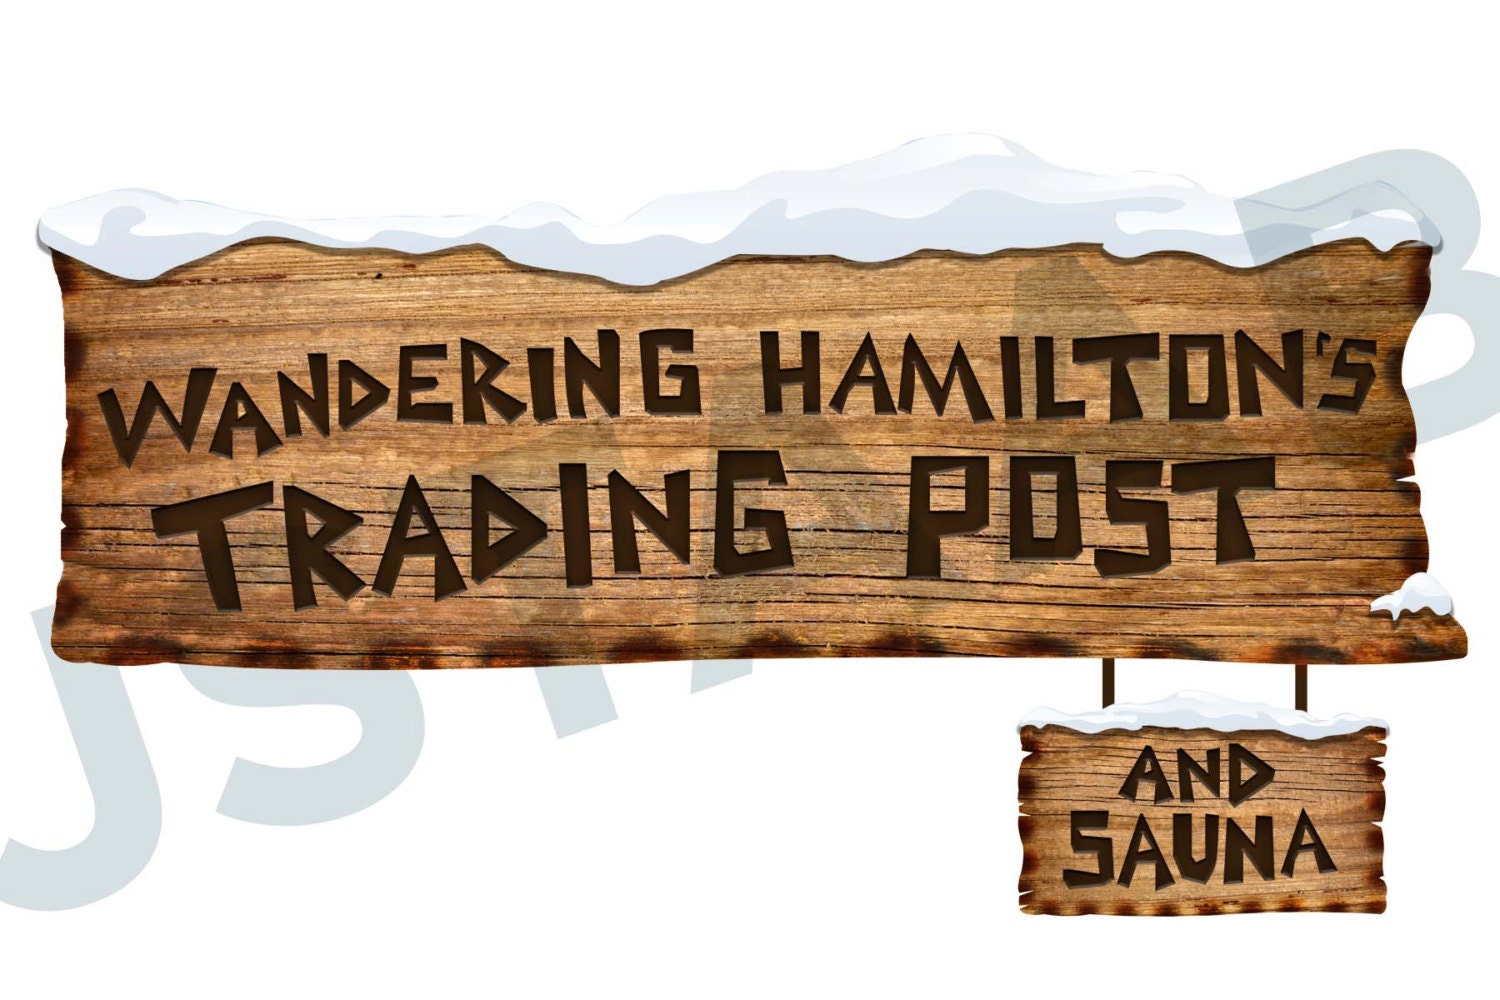 wandering oaken's trading post sign